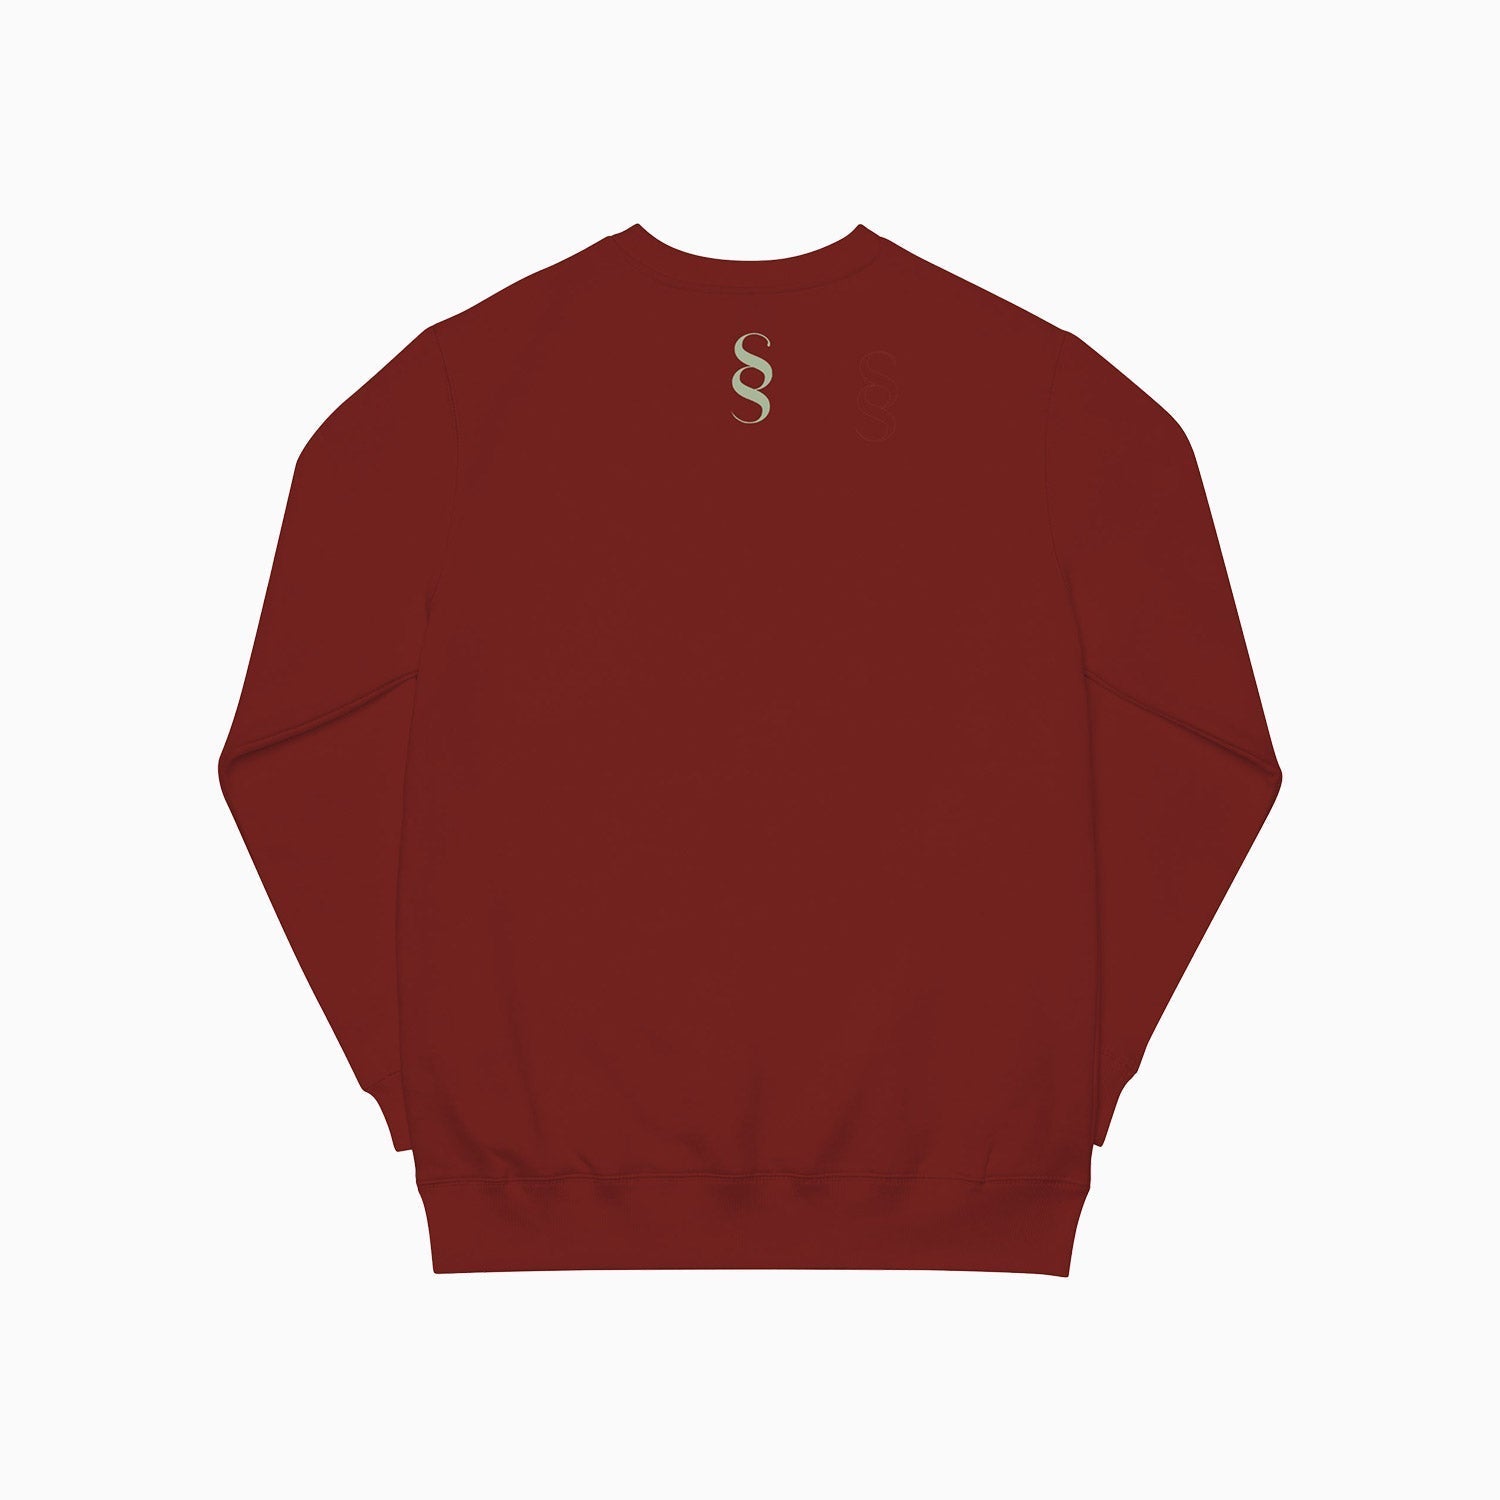 emblem-design-printed-crew-neck-bordeaux-sweatshirt-for-men-sc103-600